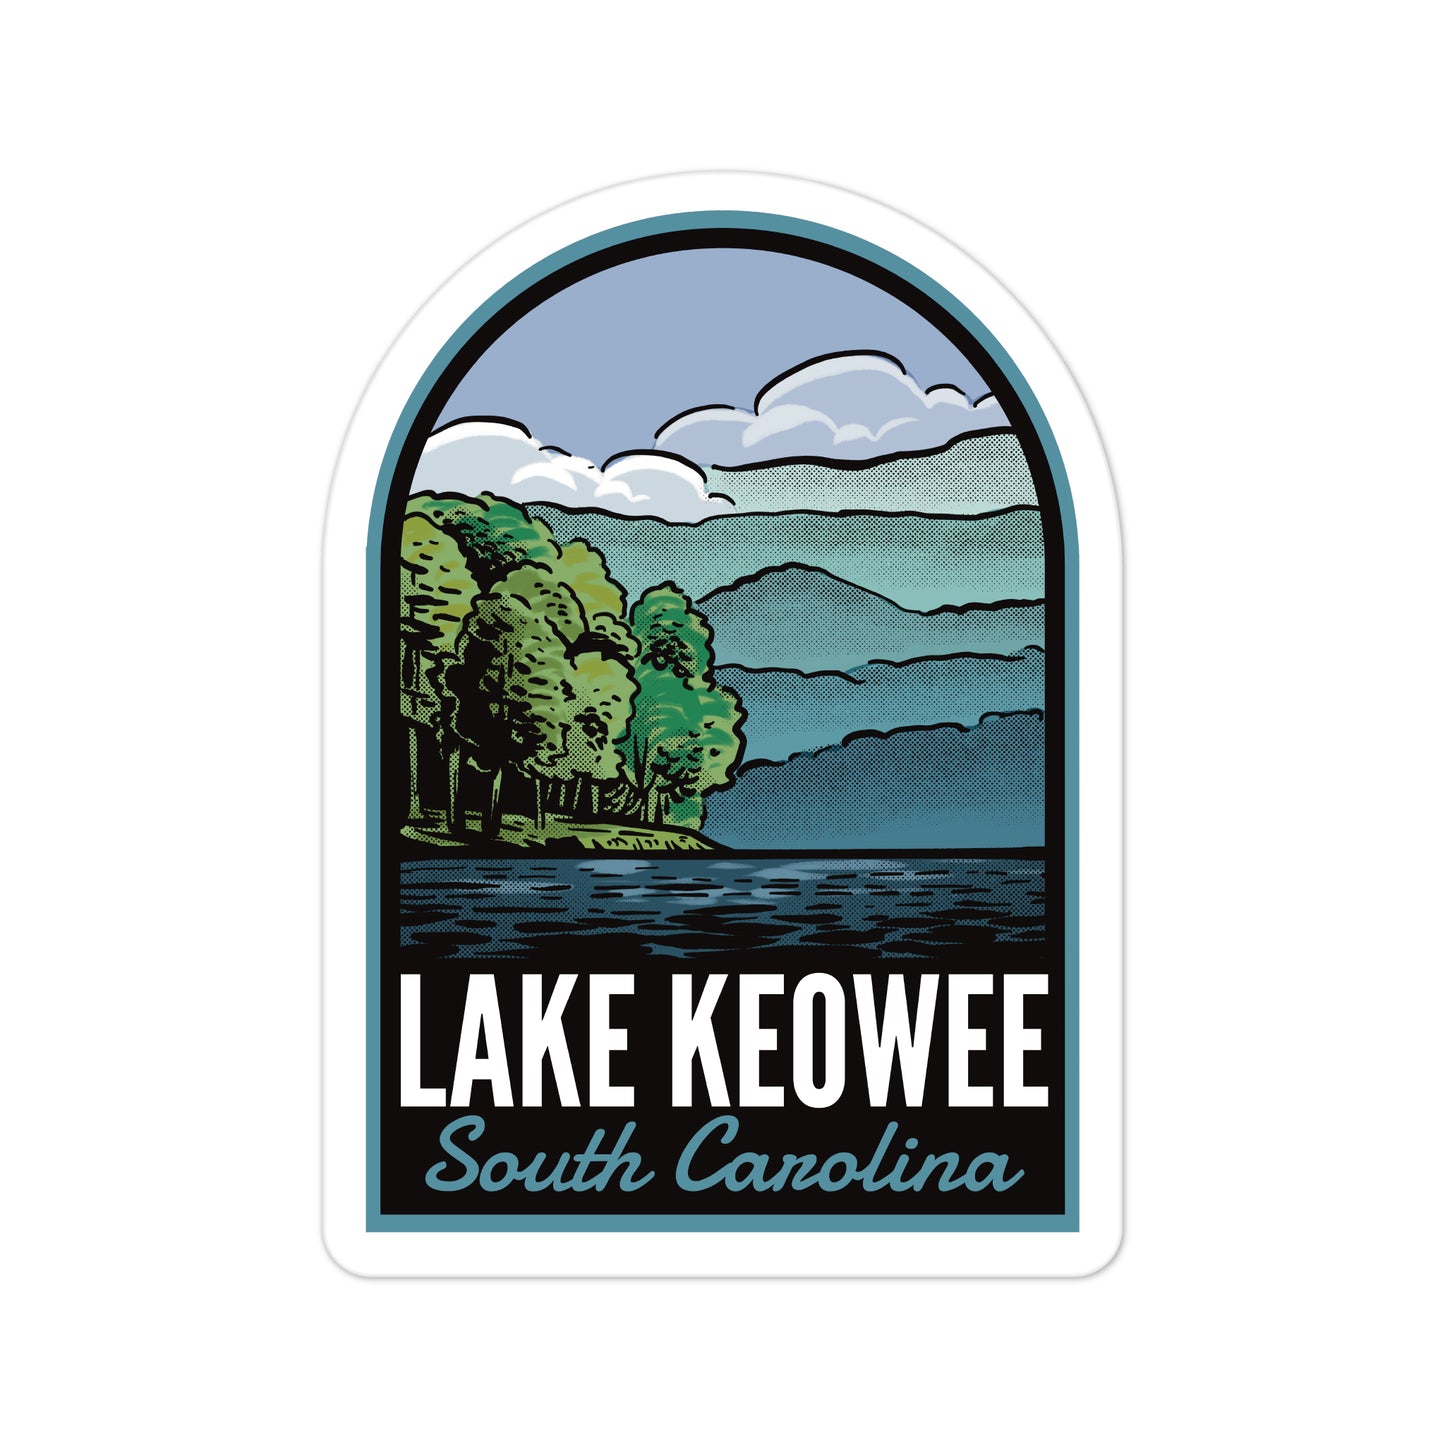 A sticker of Lake Keowee South Carolina